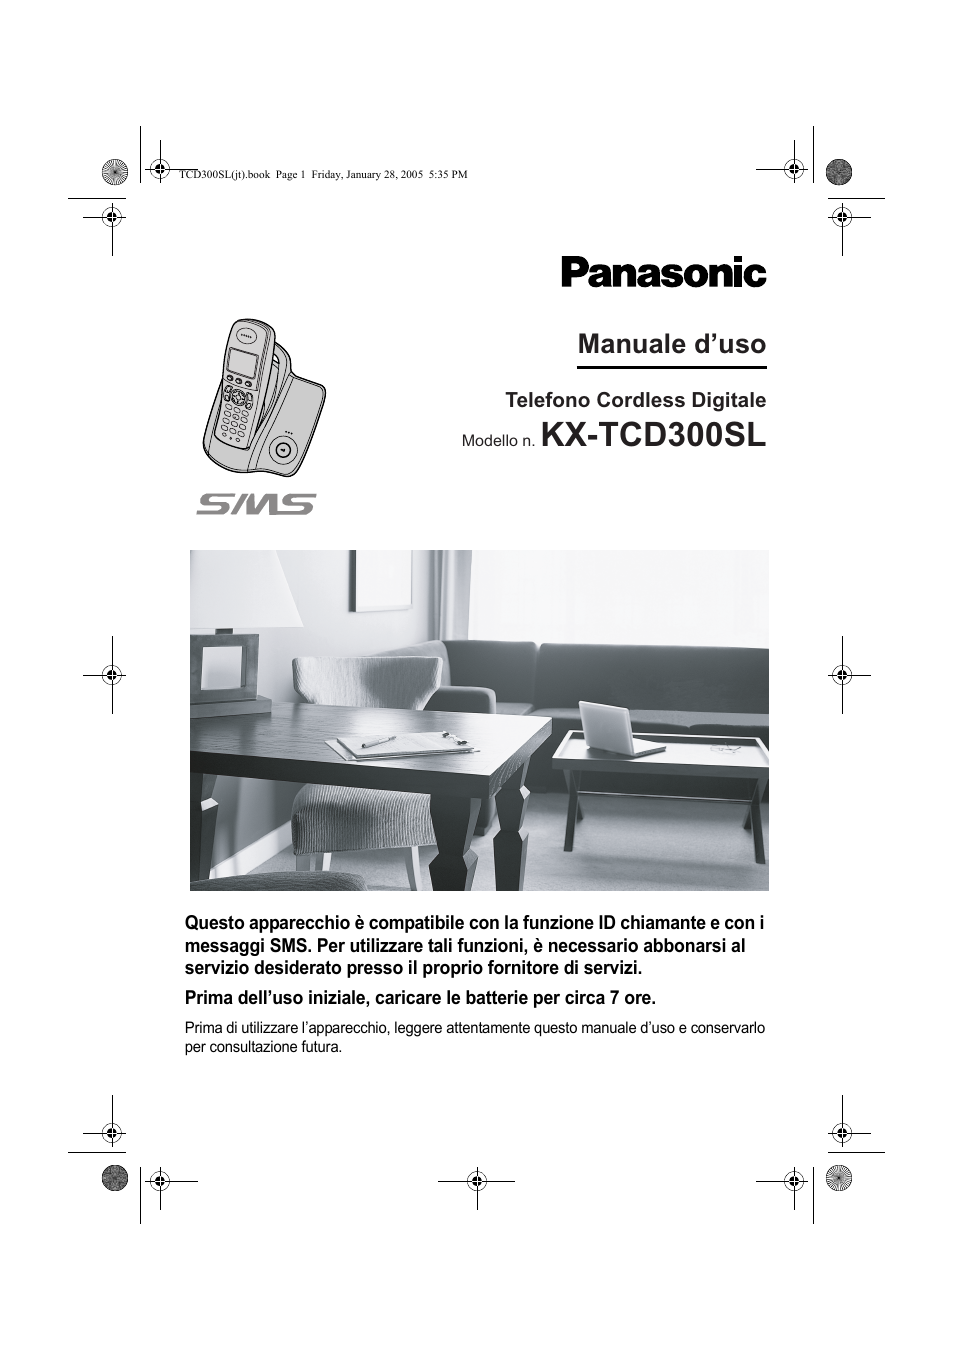 Panasonic KXTCD300SL Manuale d'uso | Pagine: 56